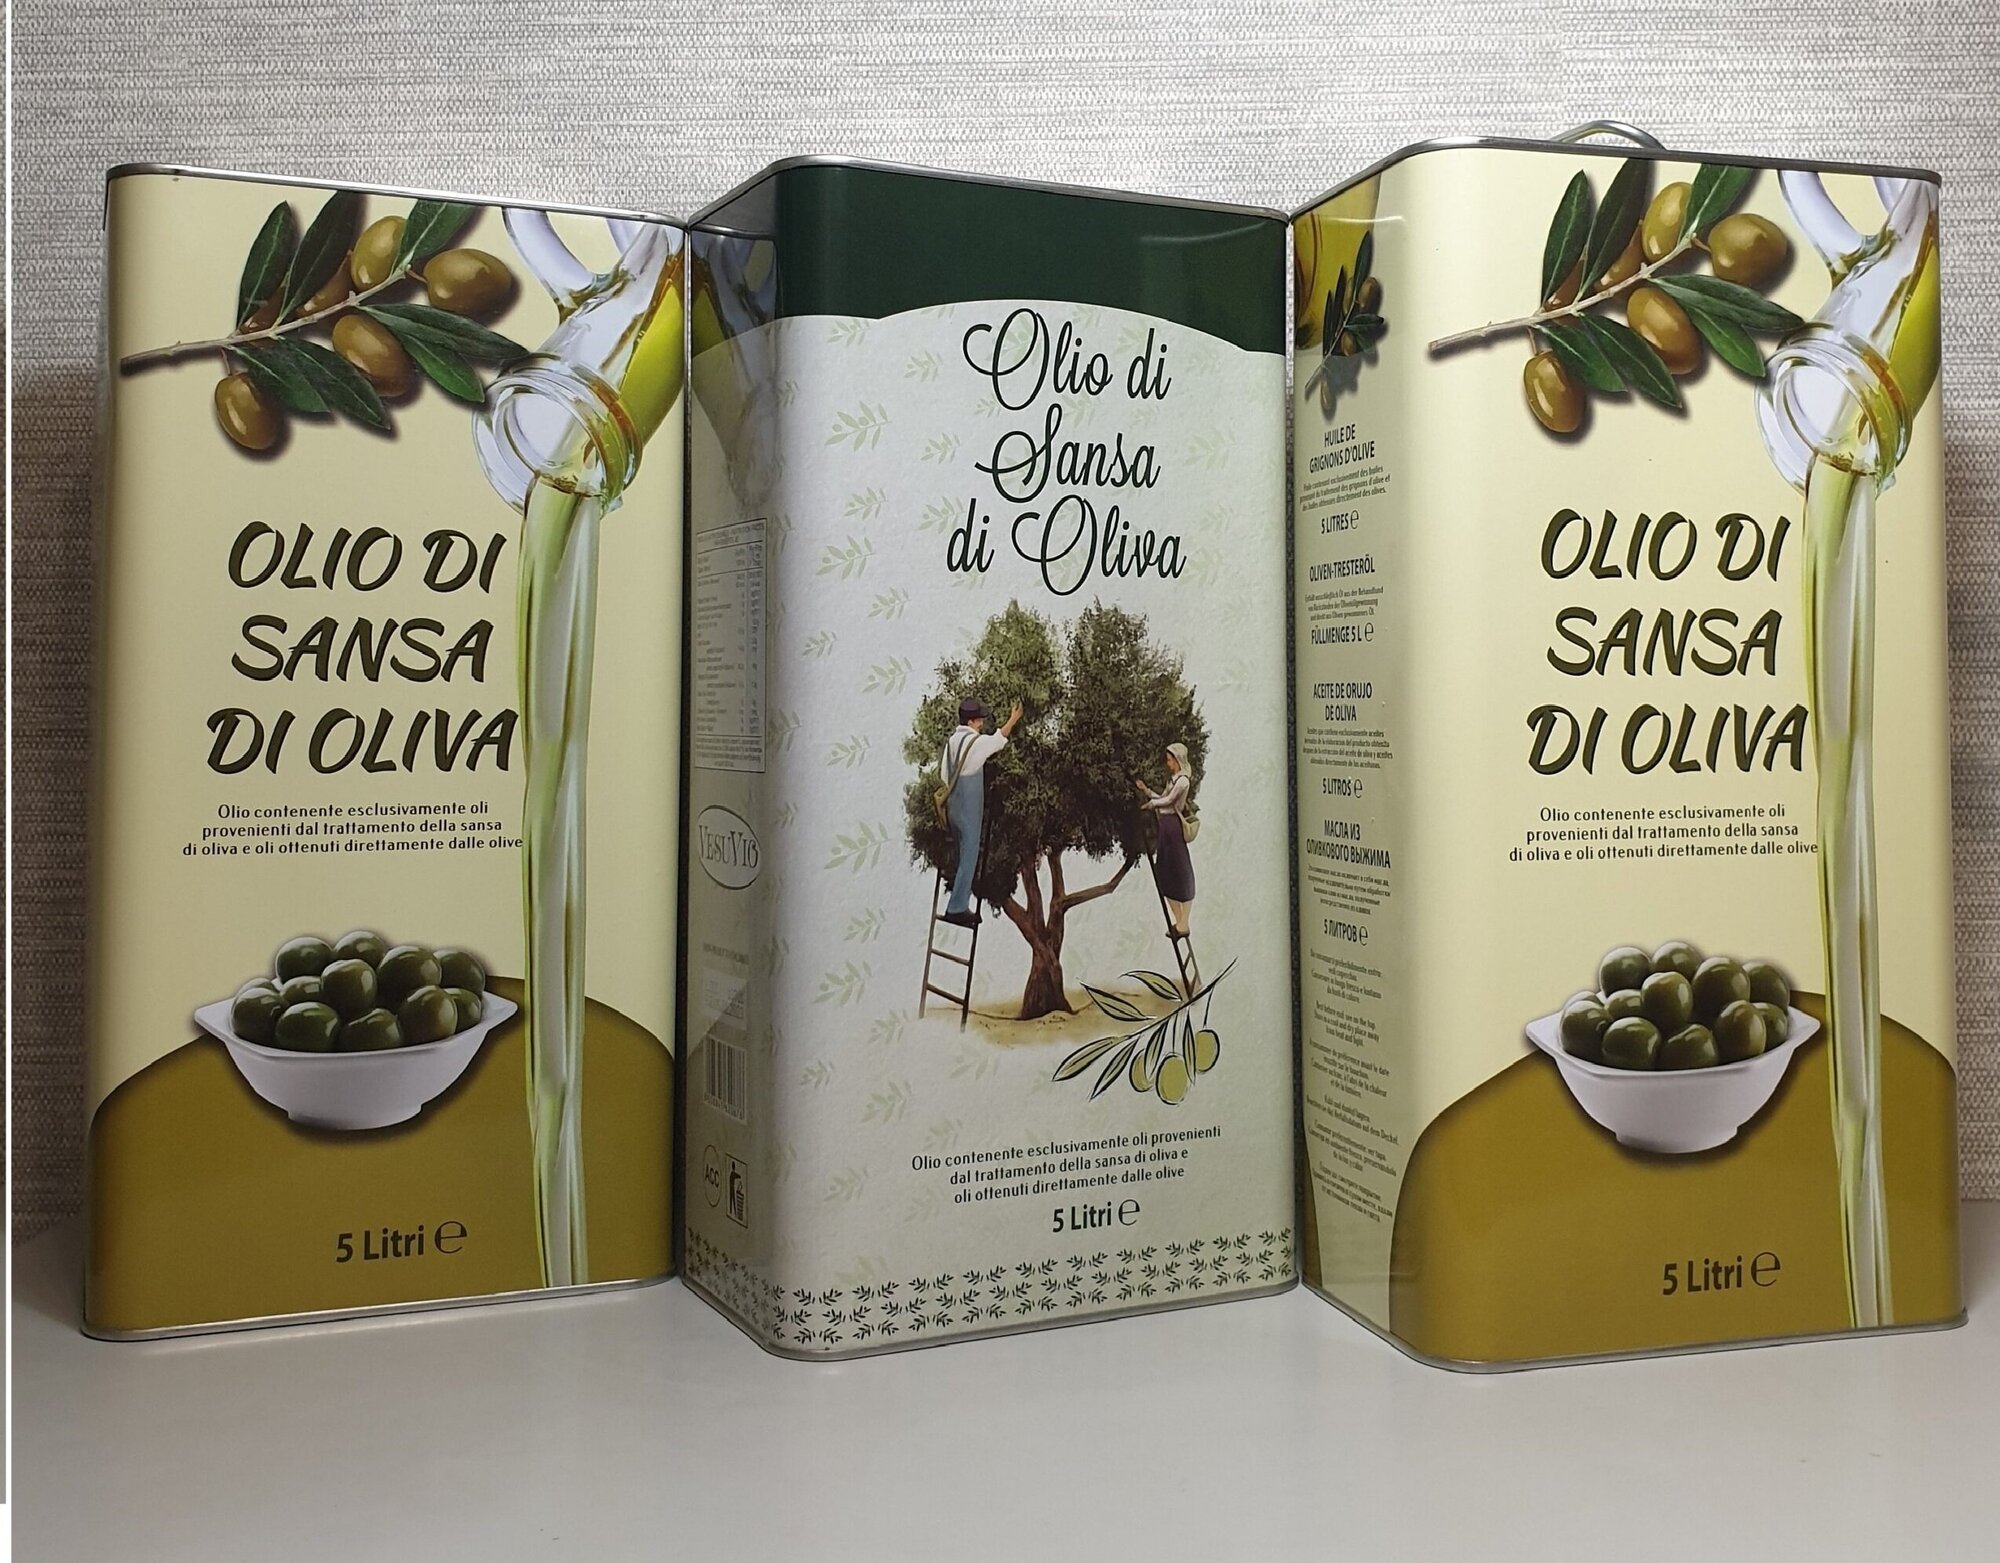 Оливковое масло для жарки Vesuvio Olio di sansa di oliva, 5л, италия